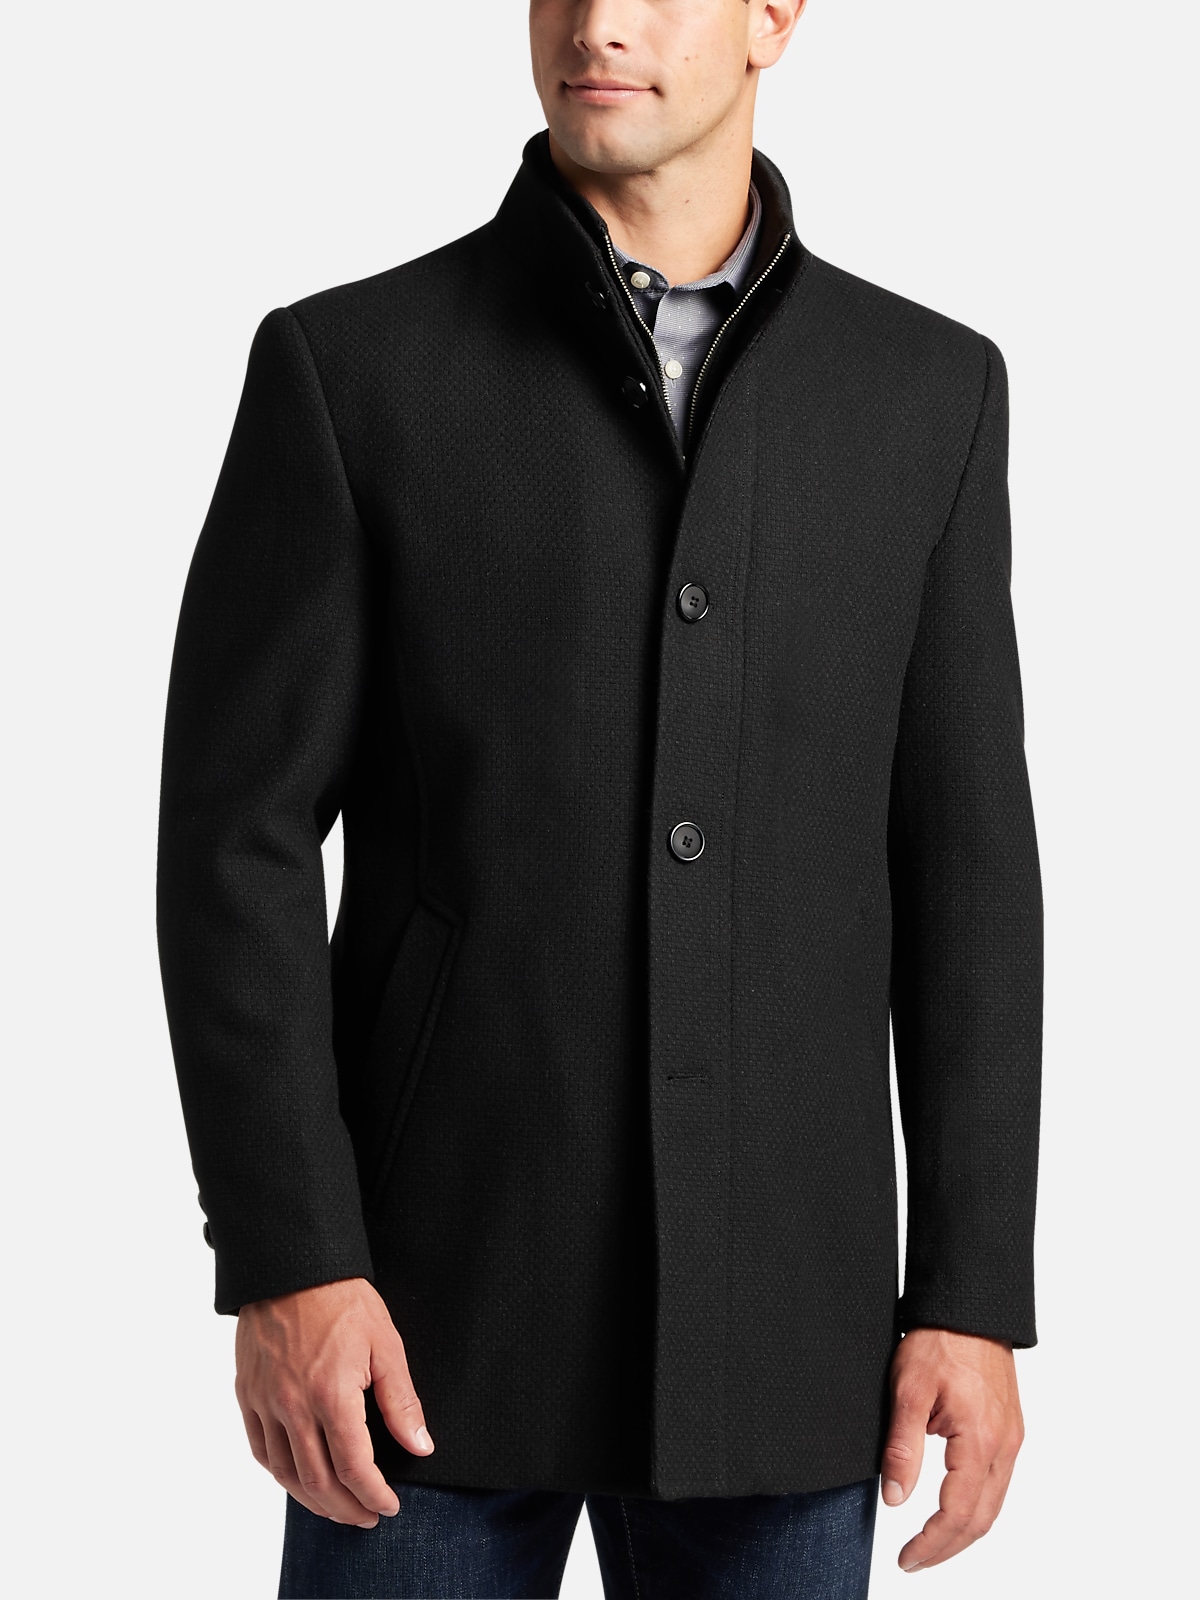 Joseph Abboud Modern Fit Car Coat | All Clearance $39.99| Men's Wearhouse